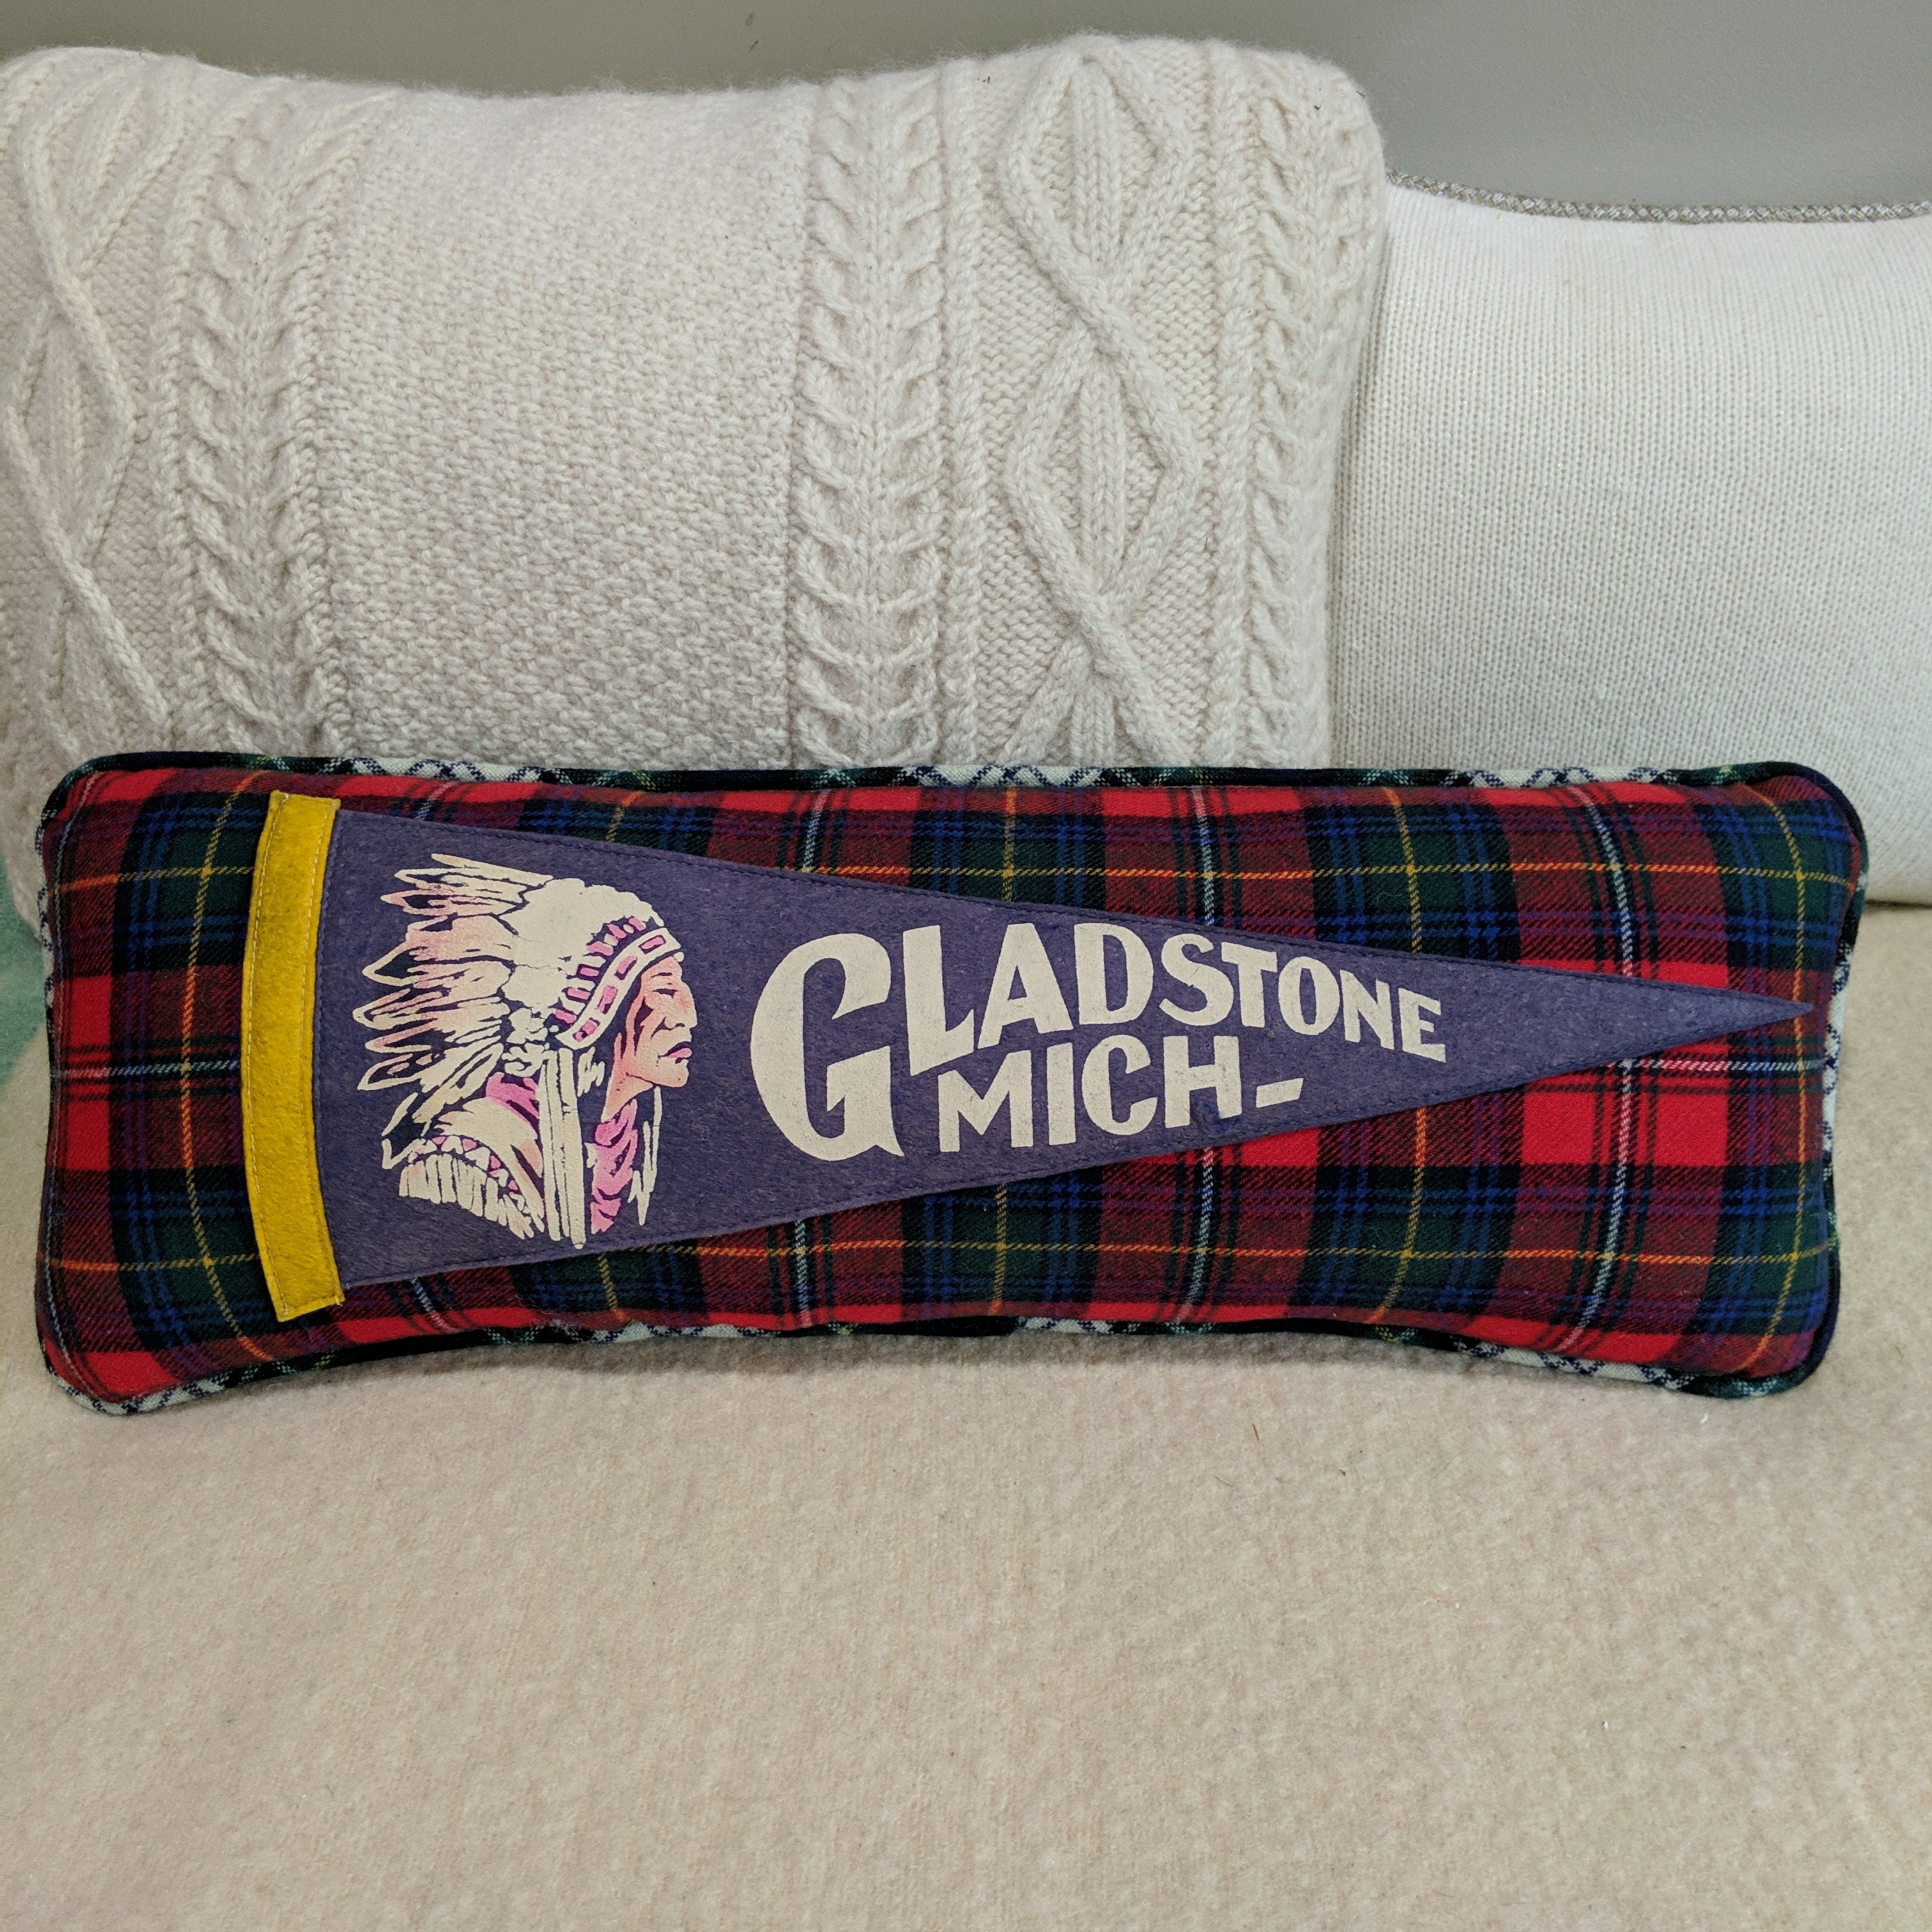 Gladstone Michigan vintage pennant pillow